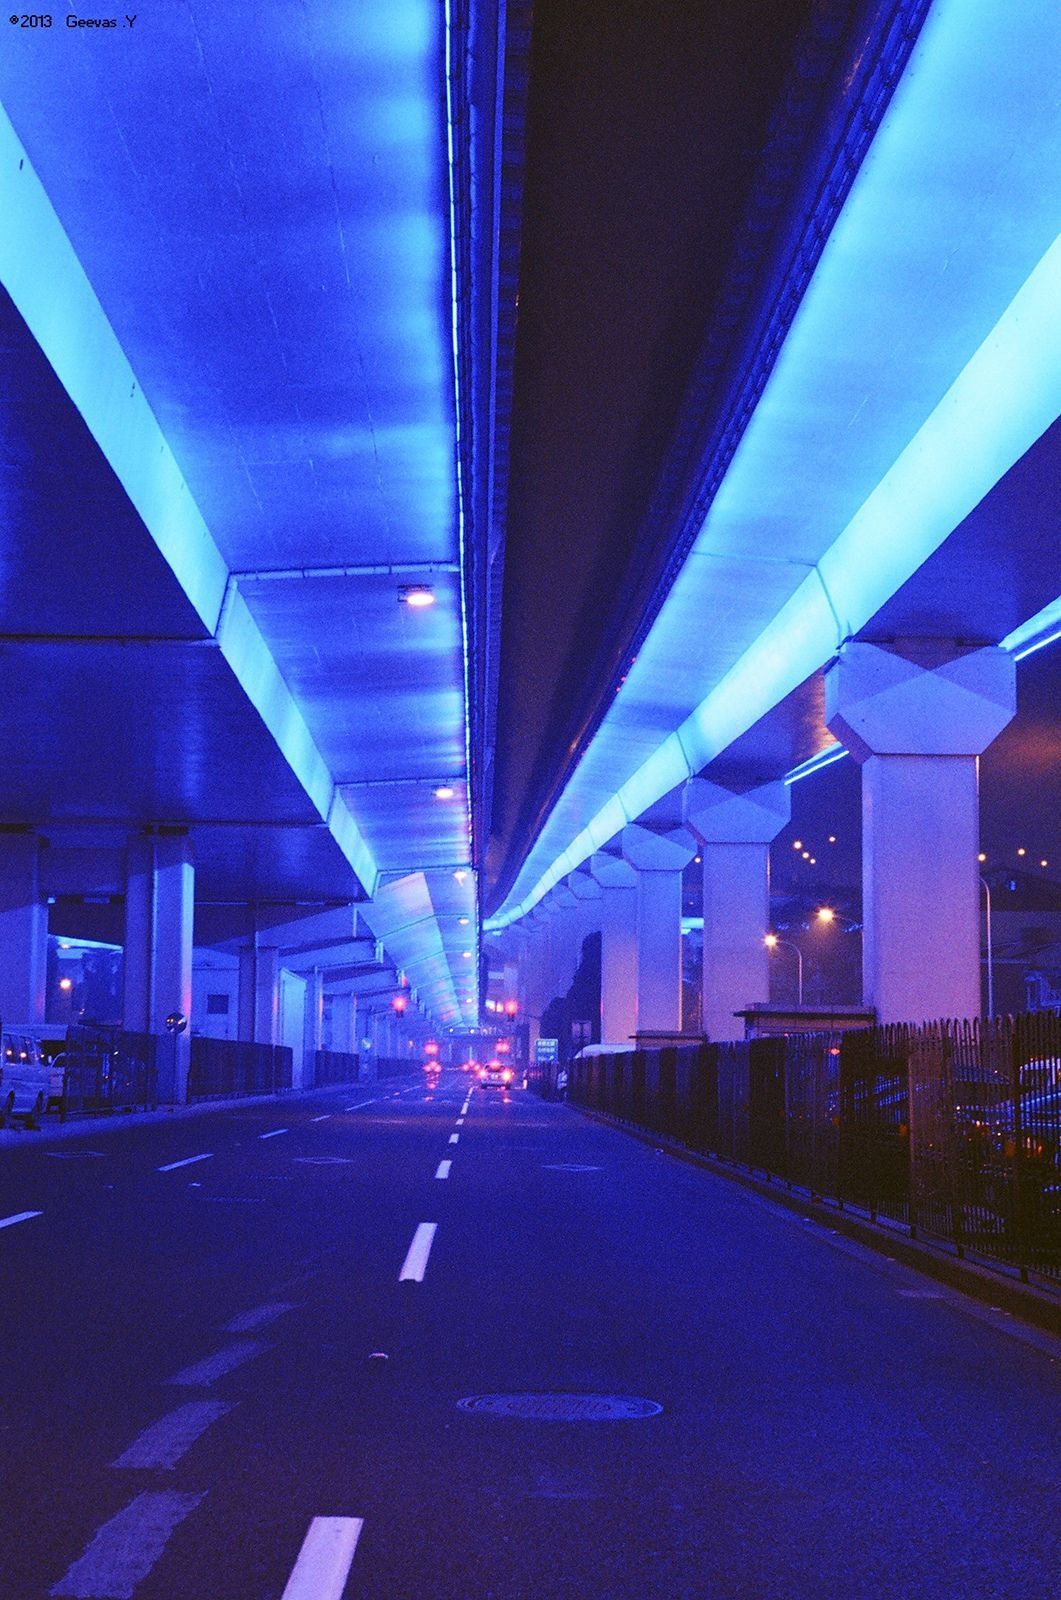 A blue tinted bridge with white pillars - Indigo